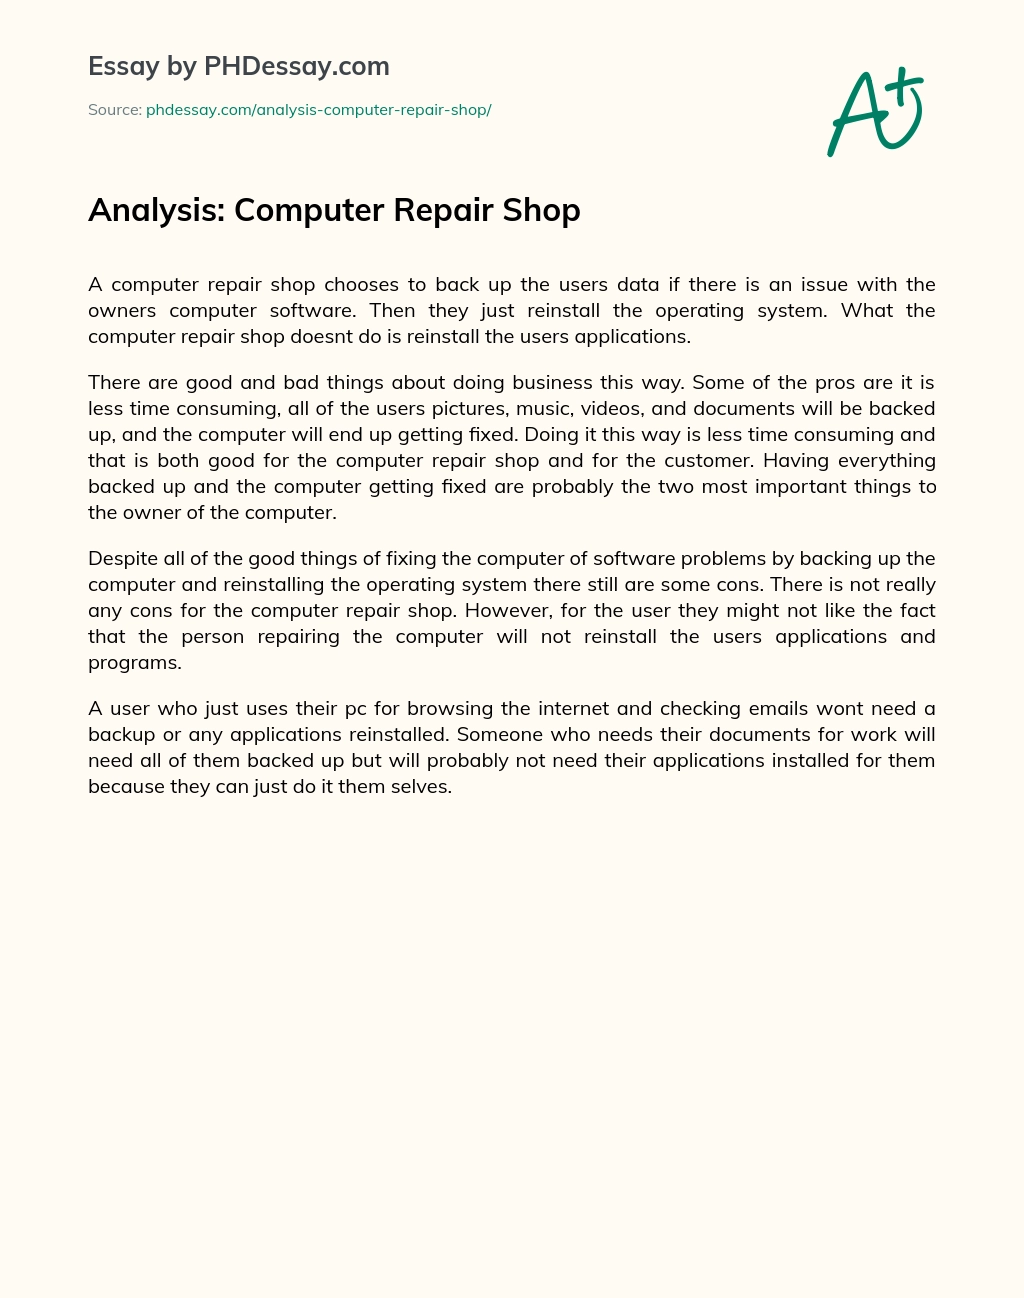 Analysis: Computer Repair Shop essay